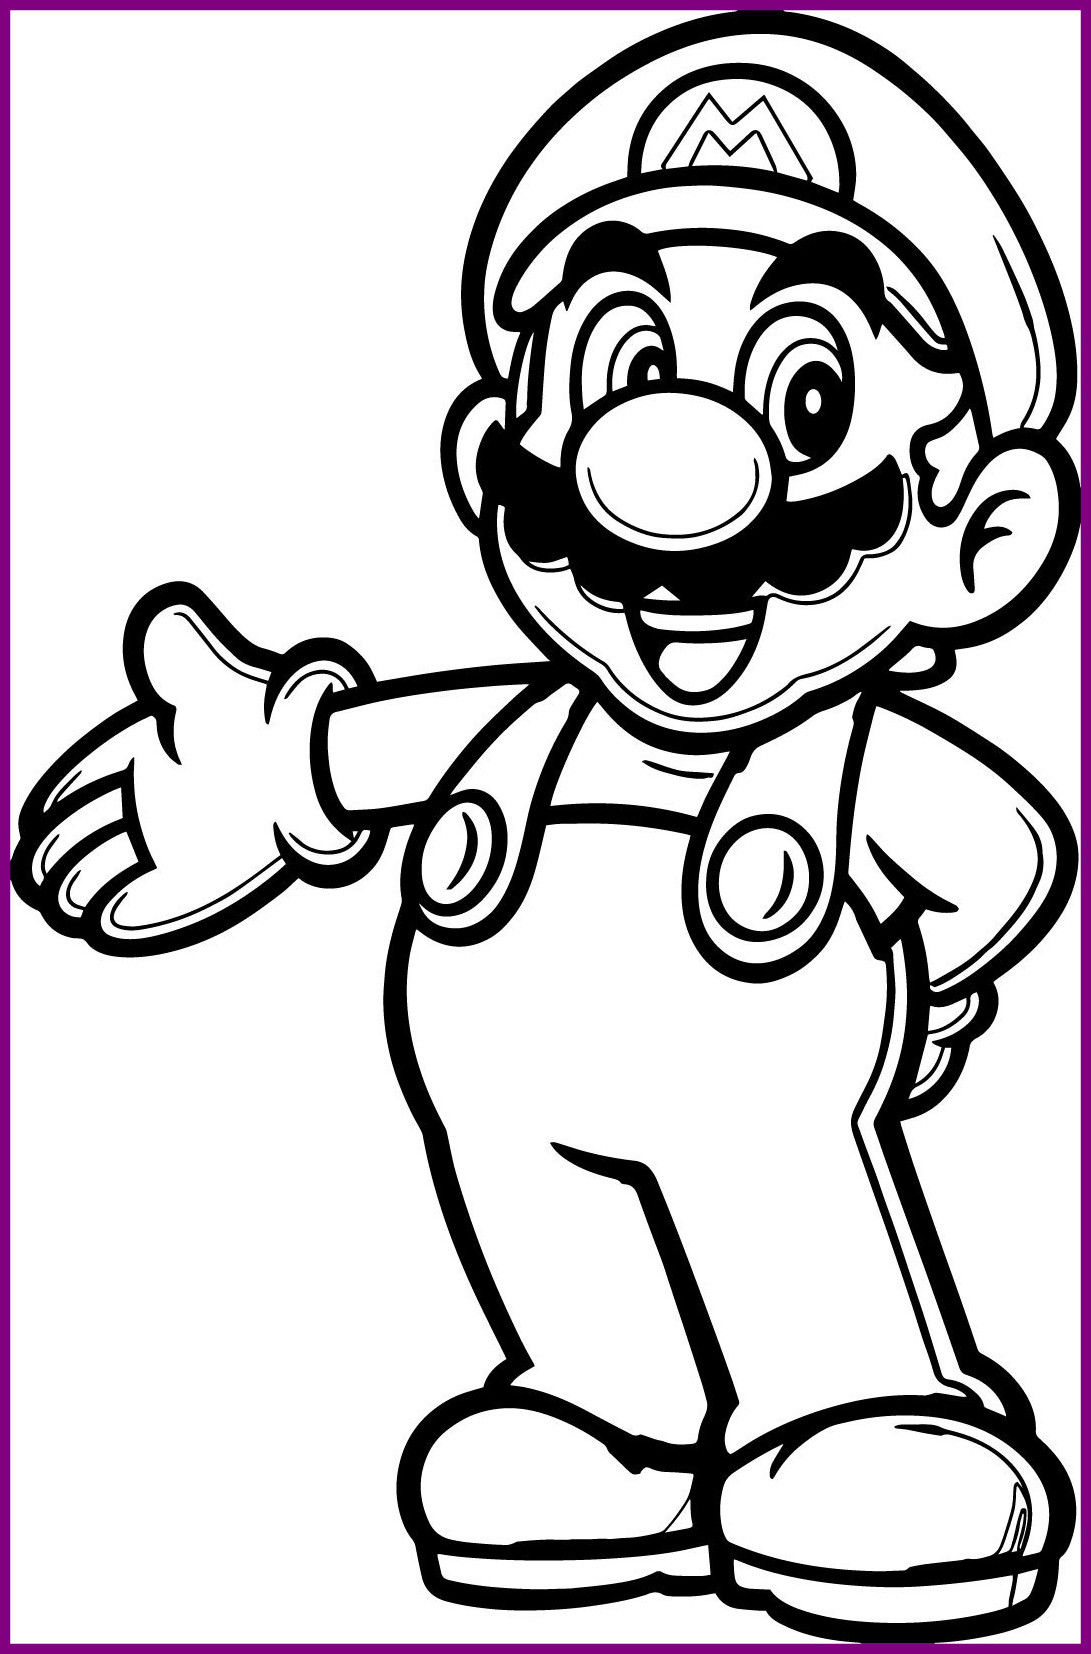 Ausmalbilder Mario Odyssey
 Mario Odyssey Coloring Pages